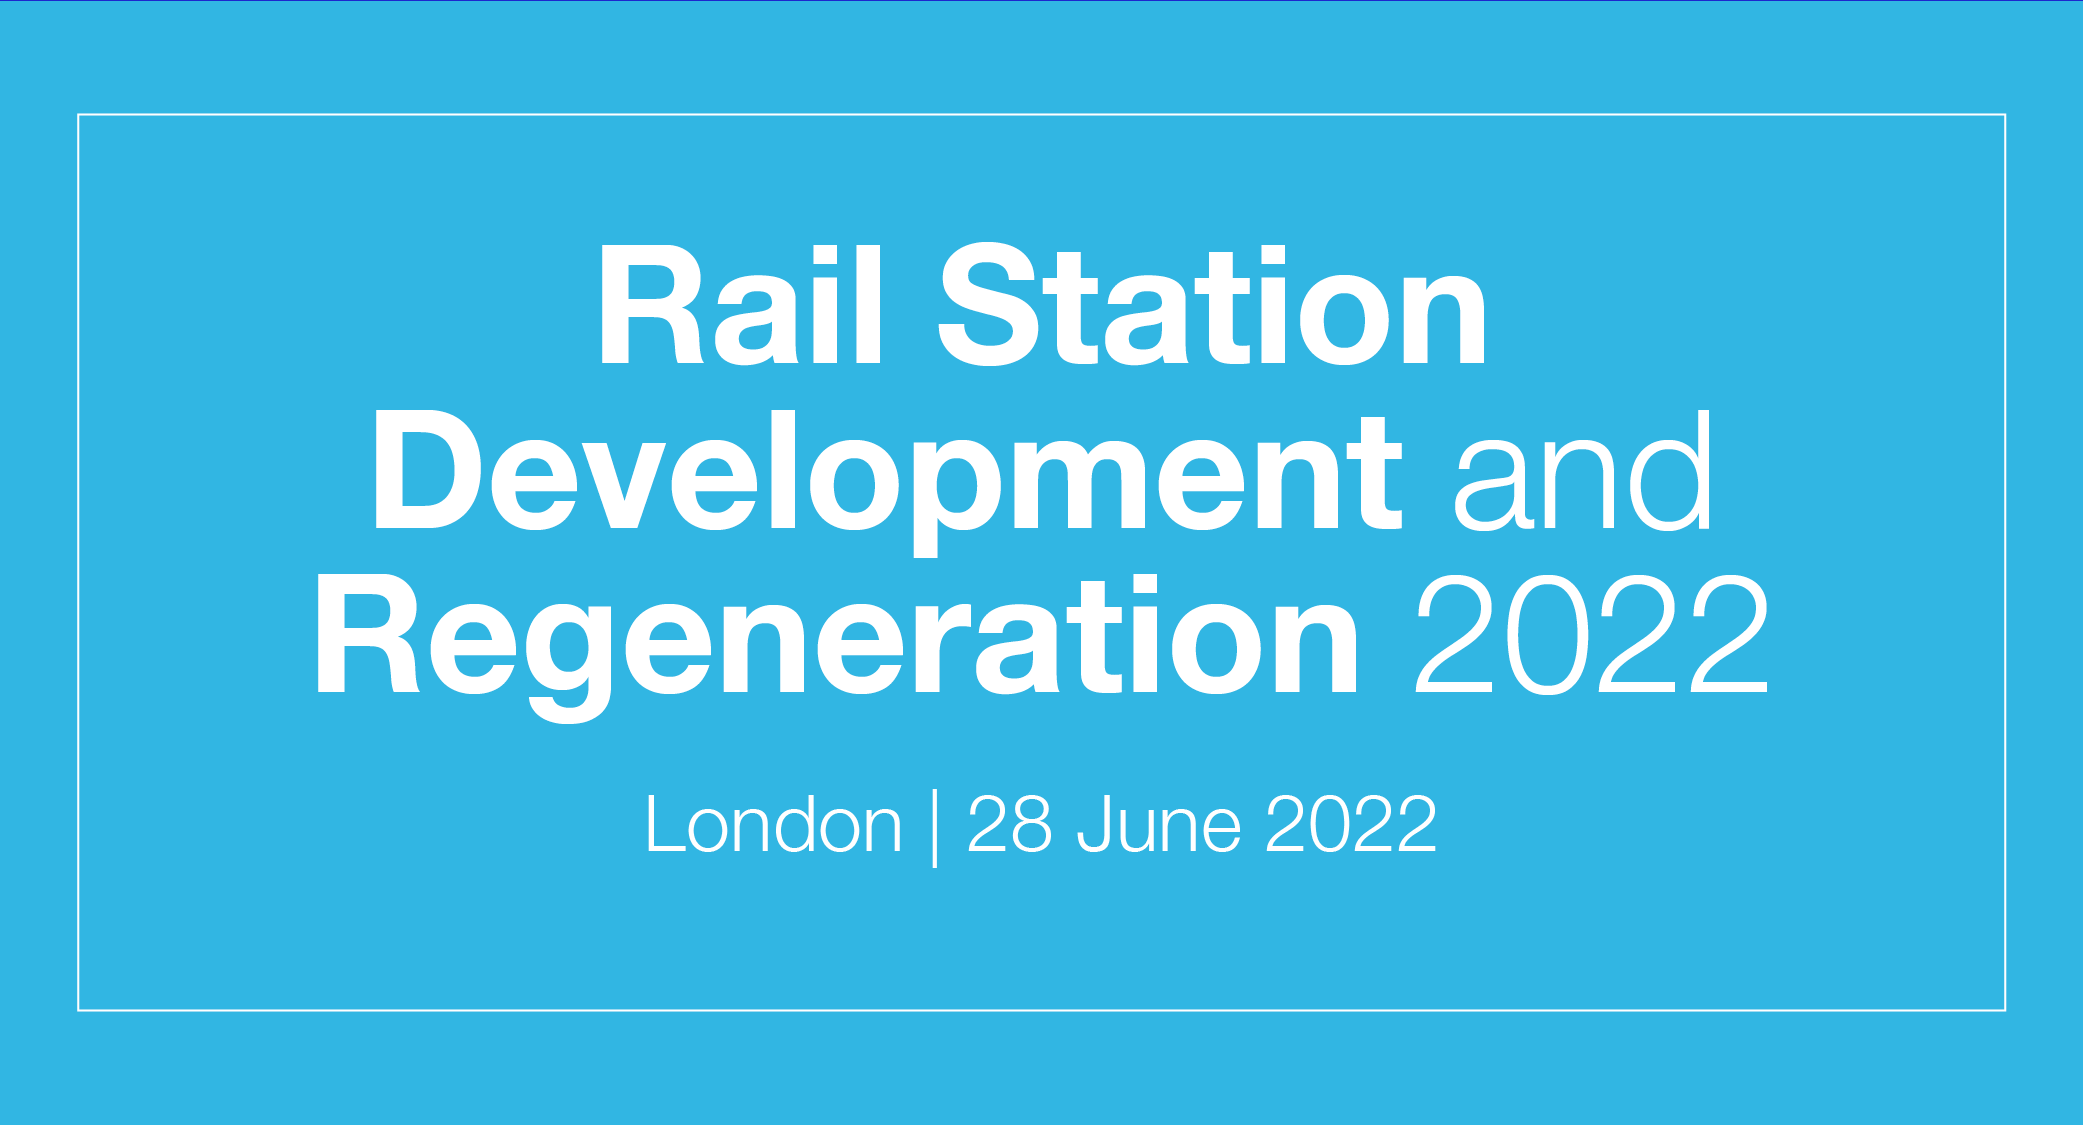 Rail Station Development and Regeneration 2022, Greater London, London, United Kingdom